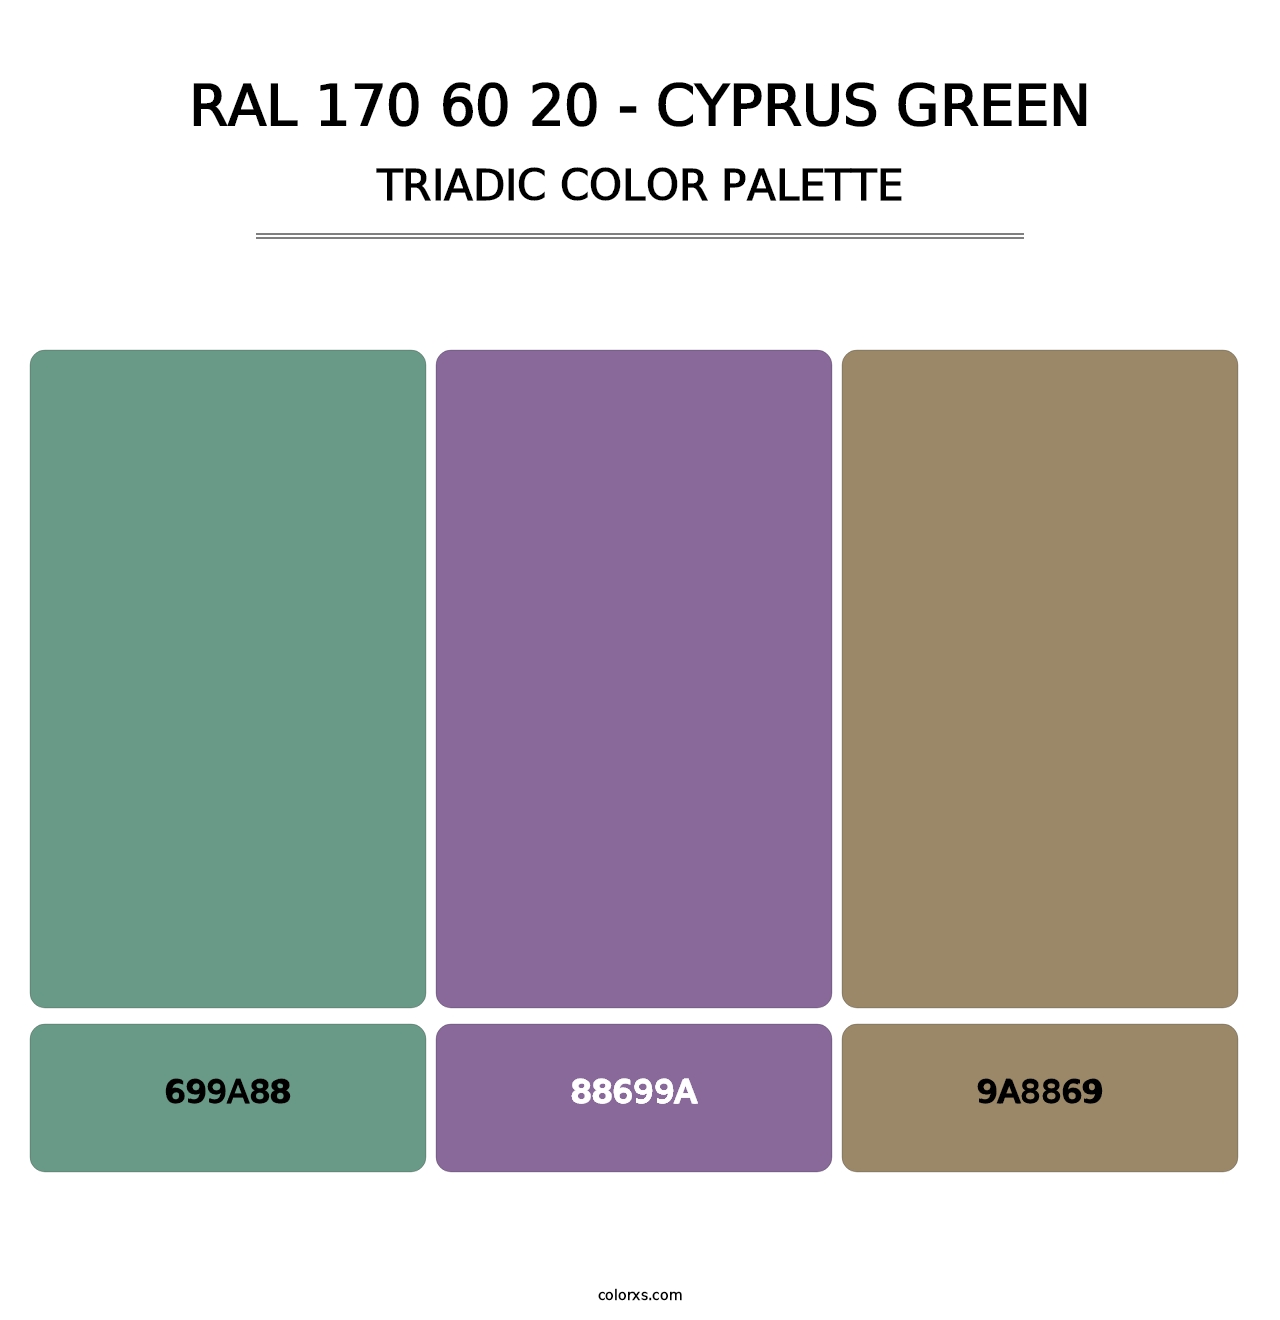 RAL 170 60 20 - Cyprus Green - Triadic Color Palette